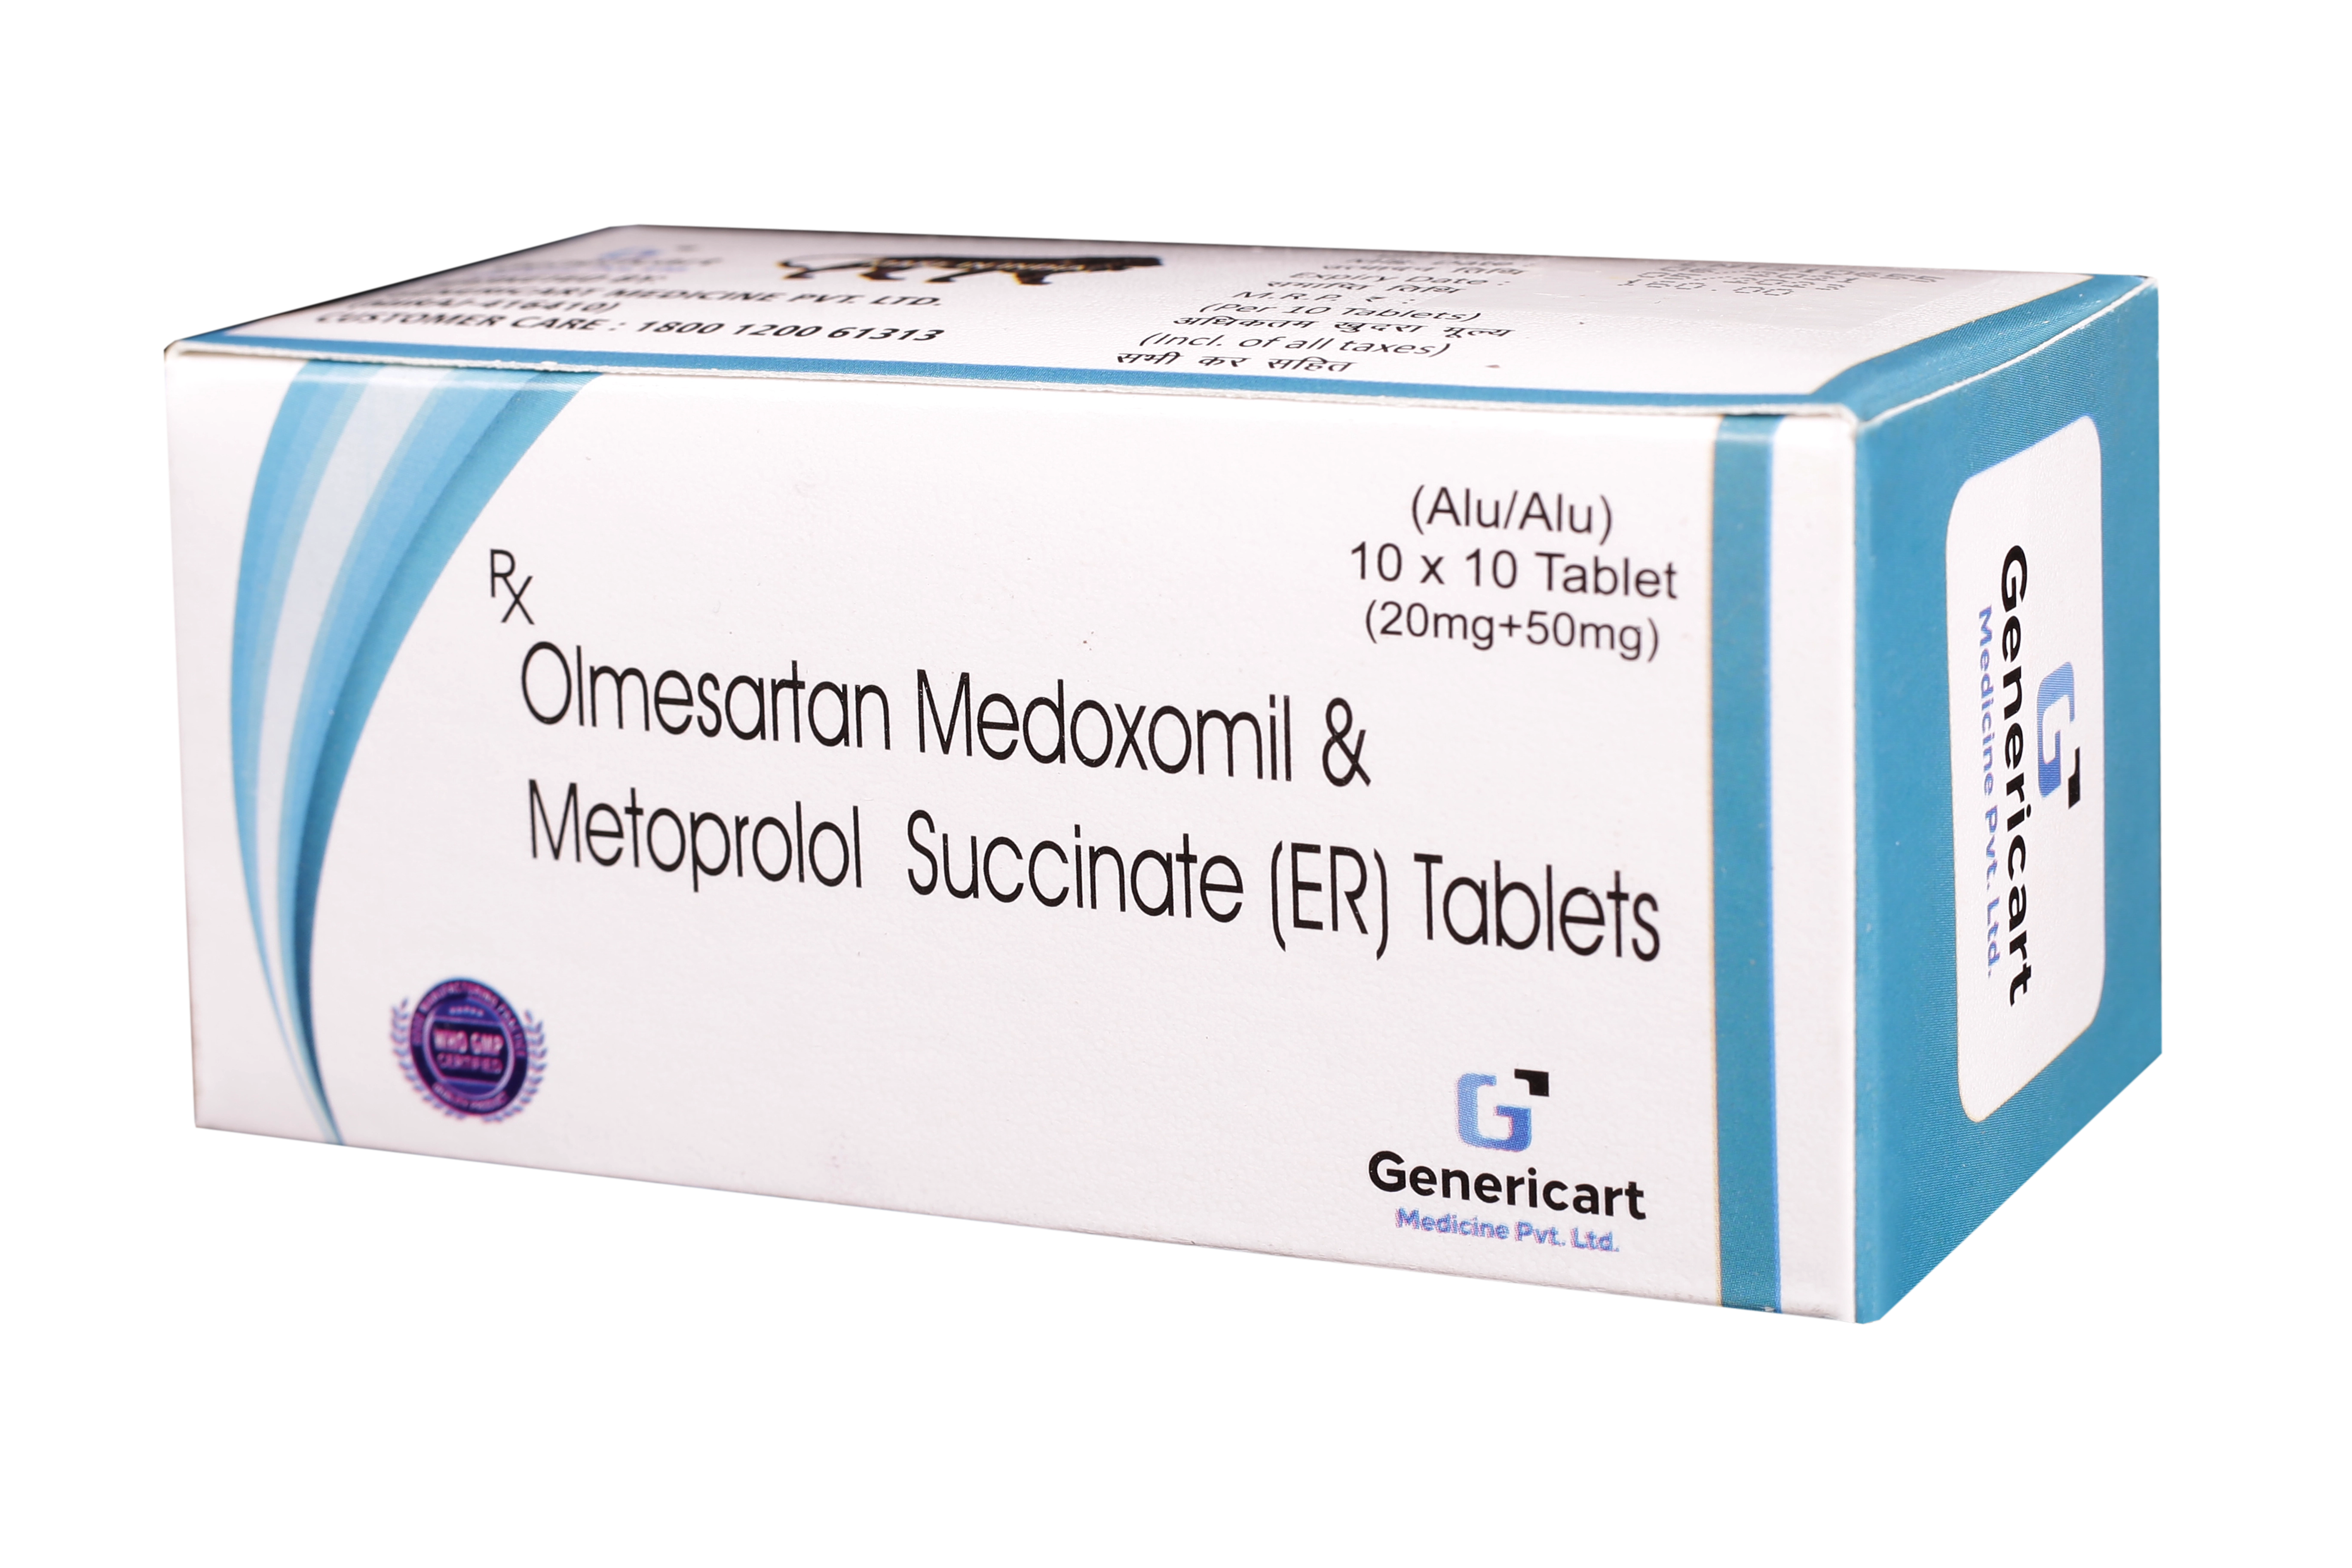 OLMESARTAN MEDOXOMIL 20 MG +  METOPROLOL SUCCINATE 50 MG (ER)